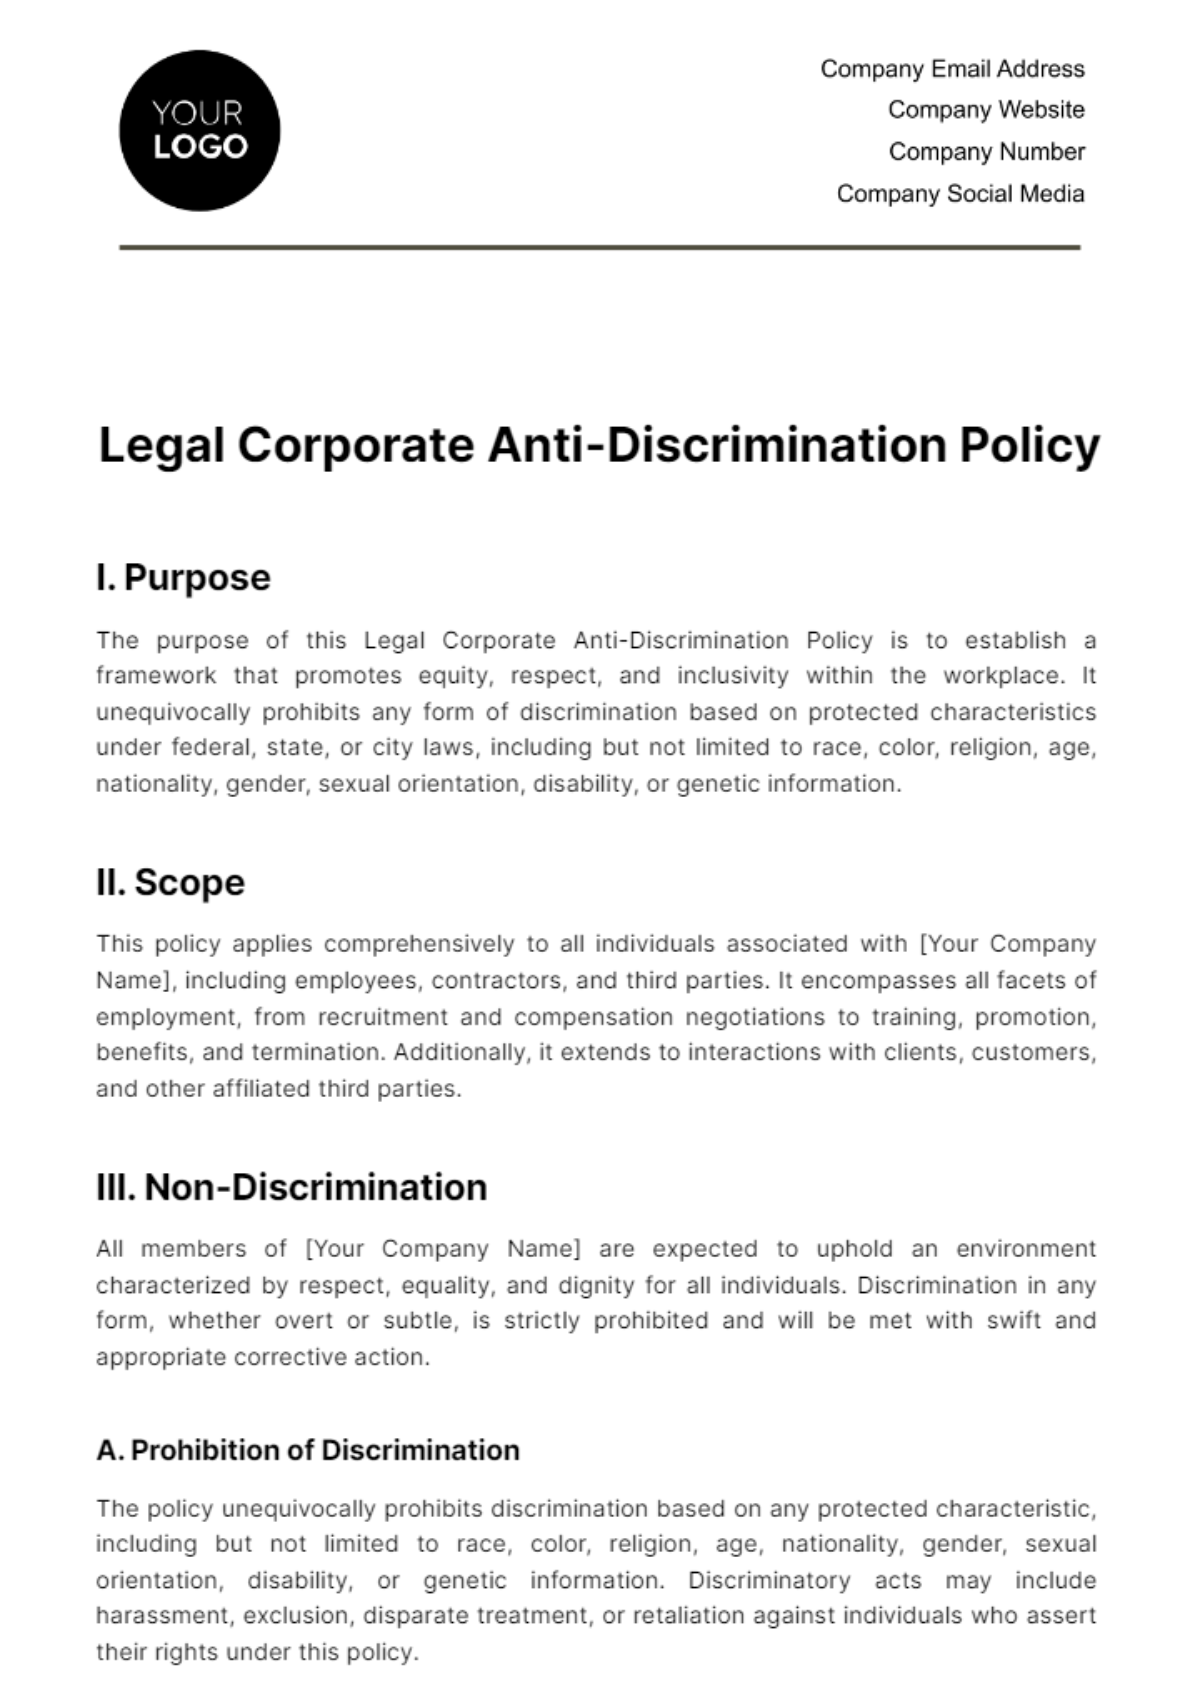 Legal Corporate Anti-Discrimination Policy Template